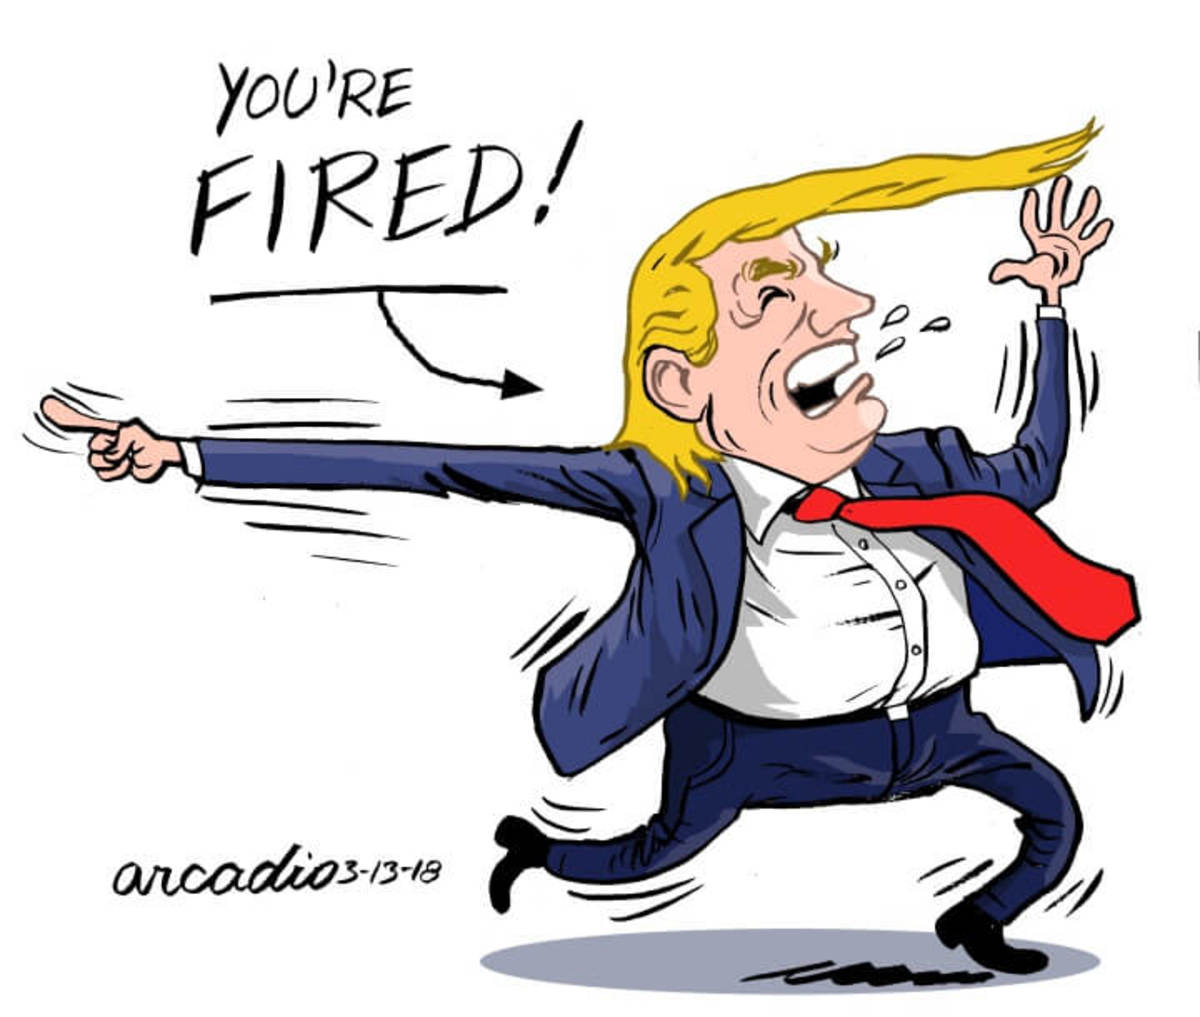 Trump Fired